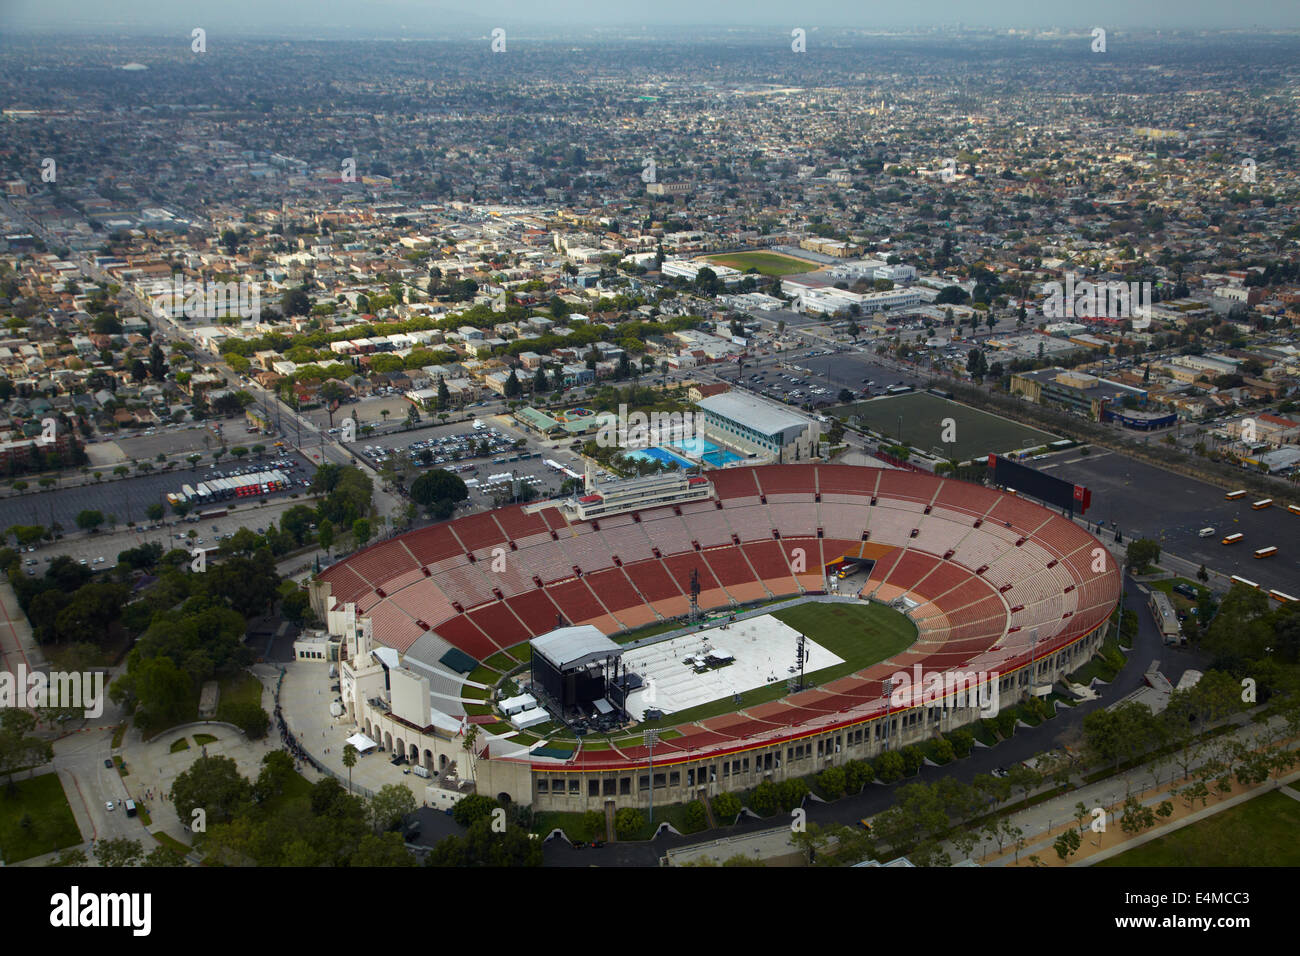 The Los Angeles Memorial Coliseum ('The Coliseum'), Los Angeles, California, USA - aerial Stock Photo